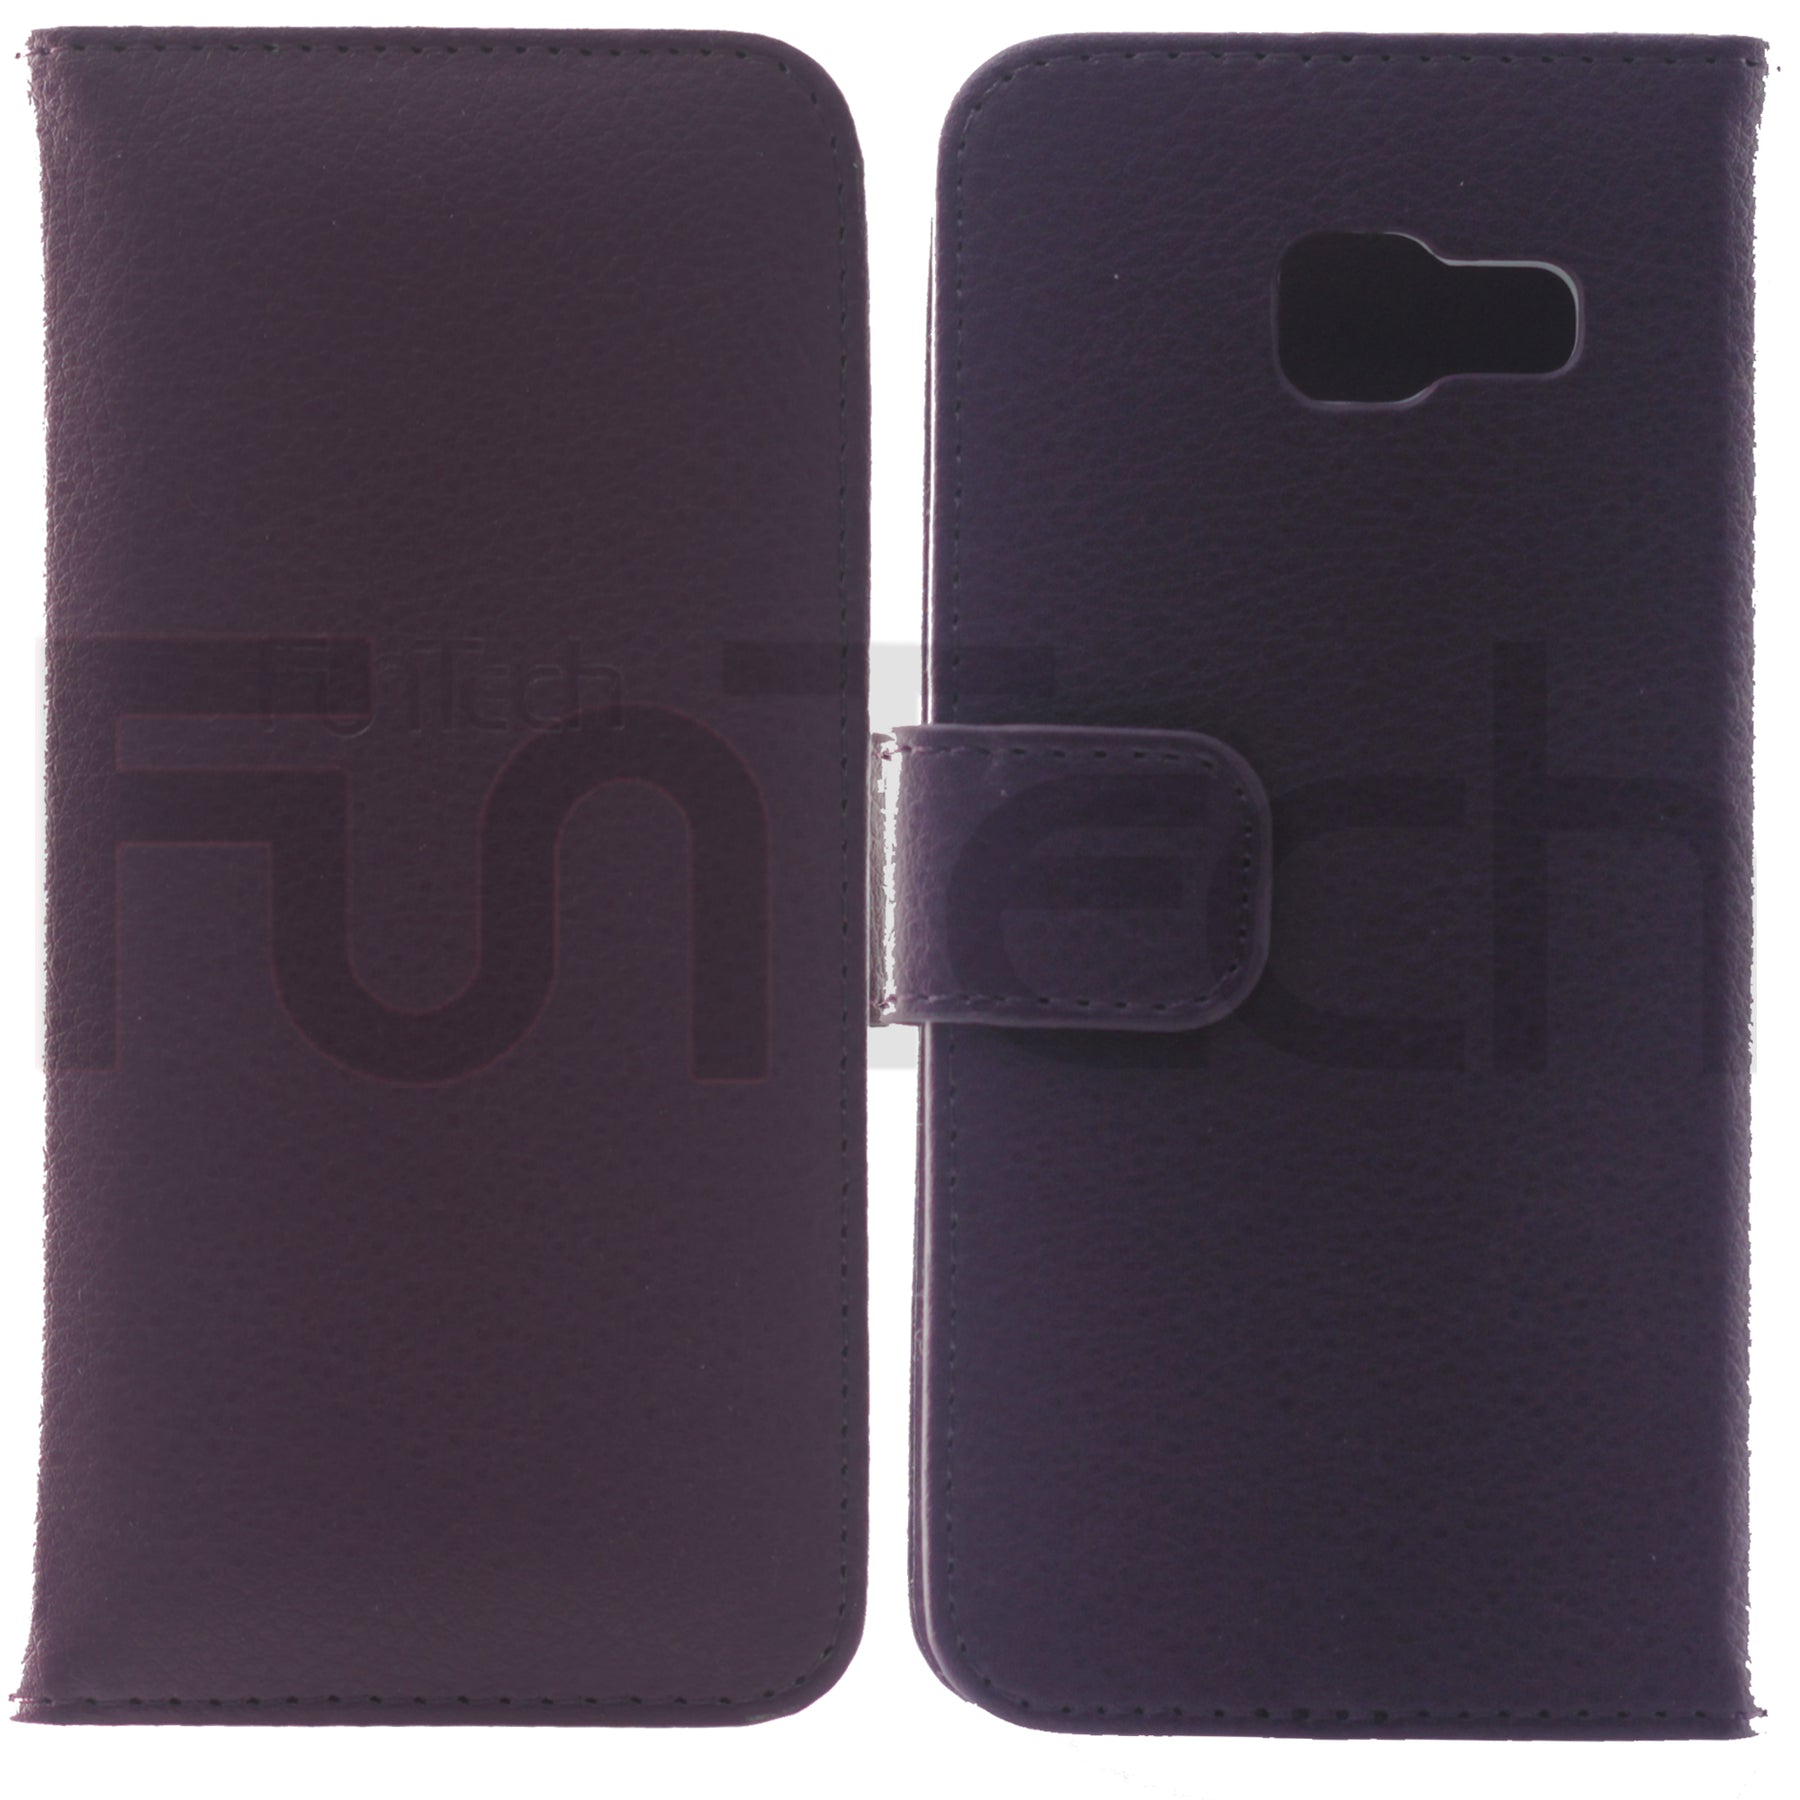 Samsung A3 2016, Leather Wallet Case, Color Purple.